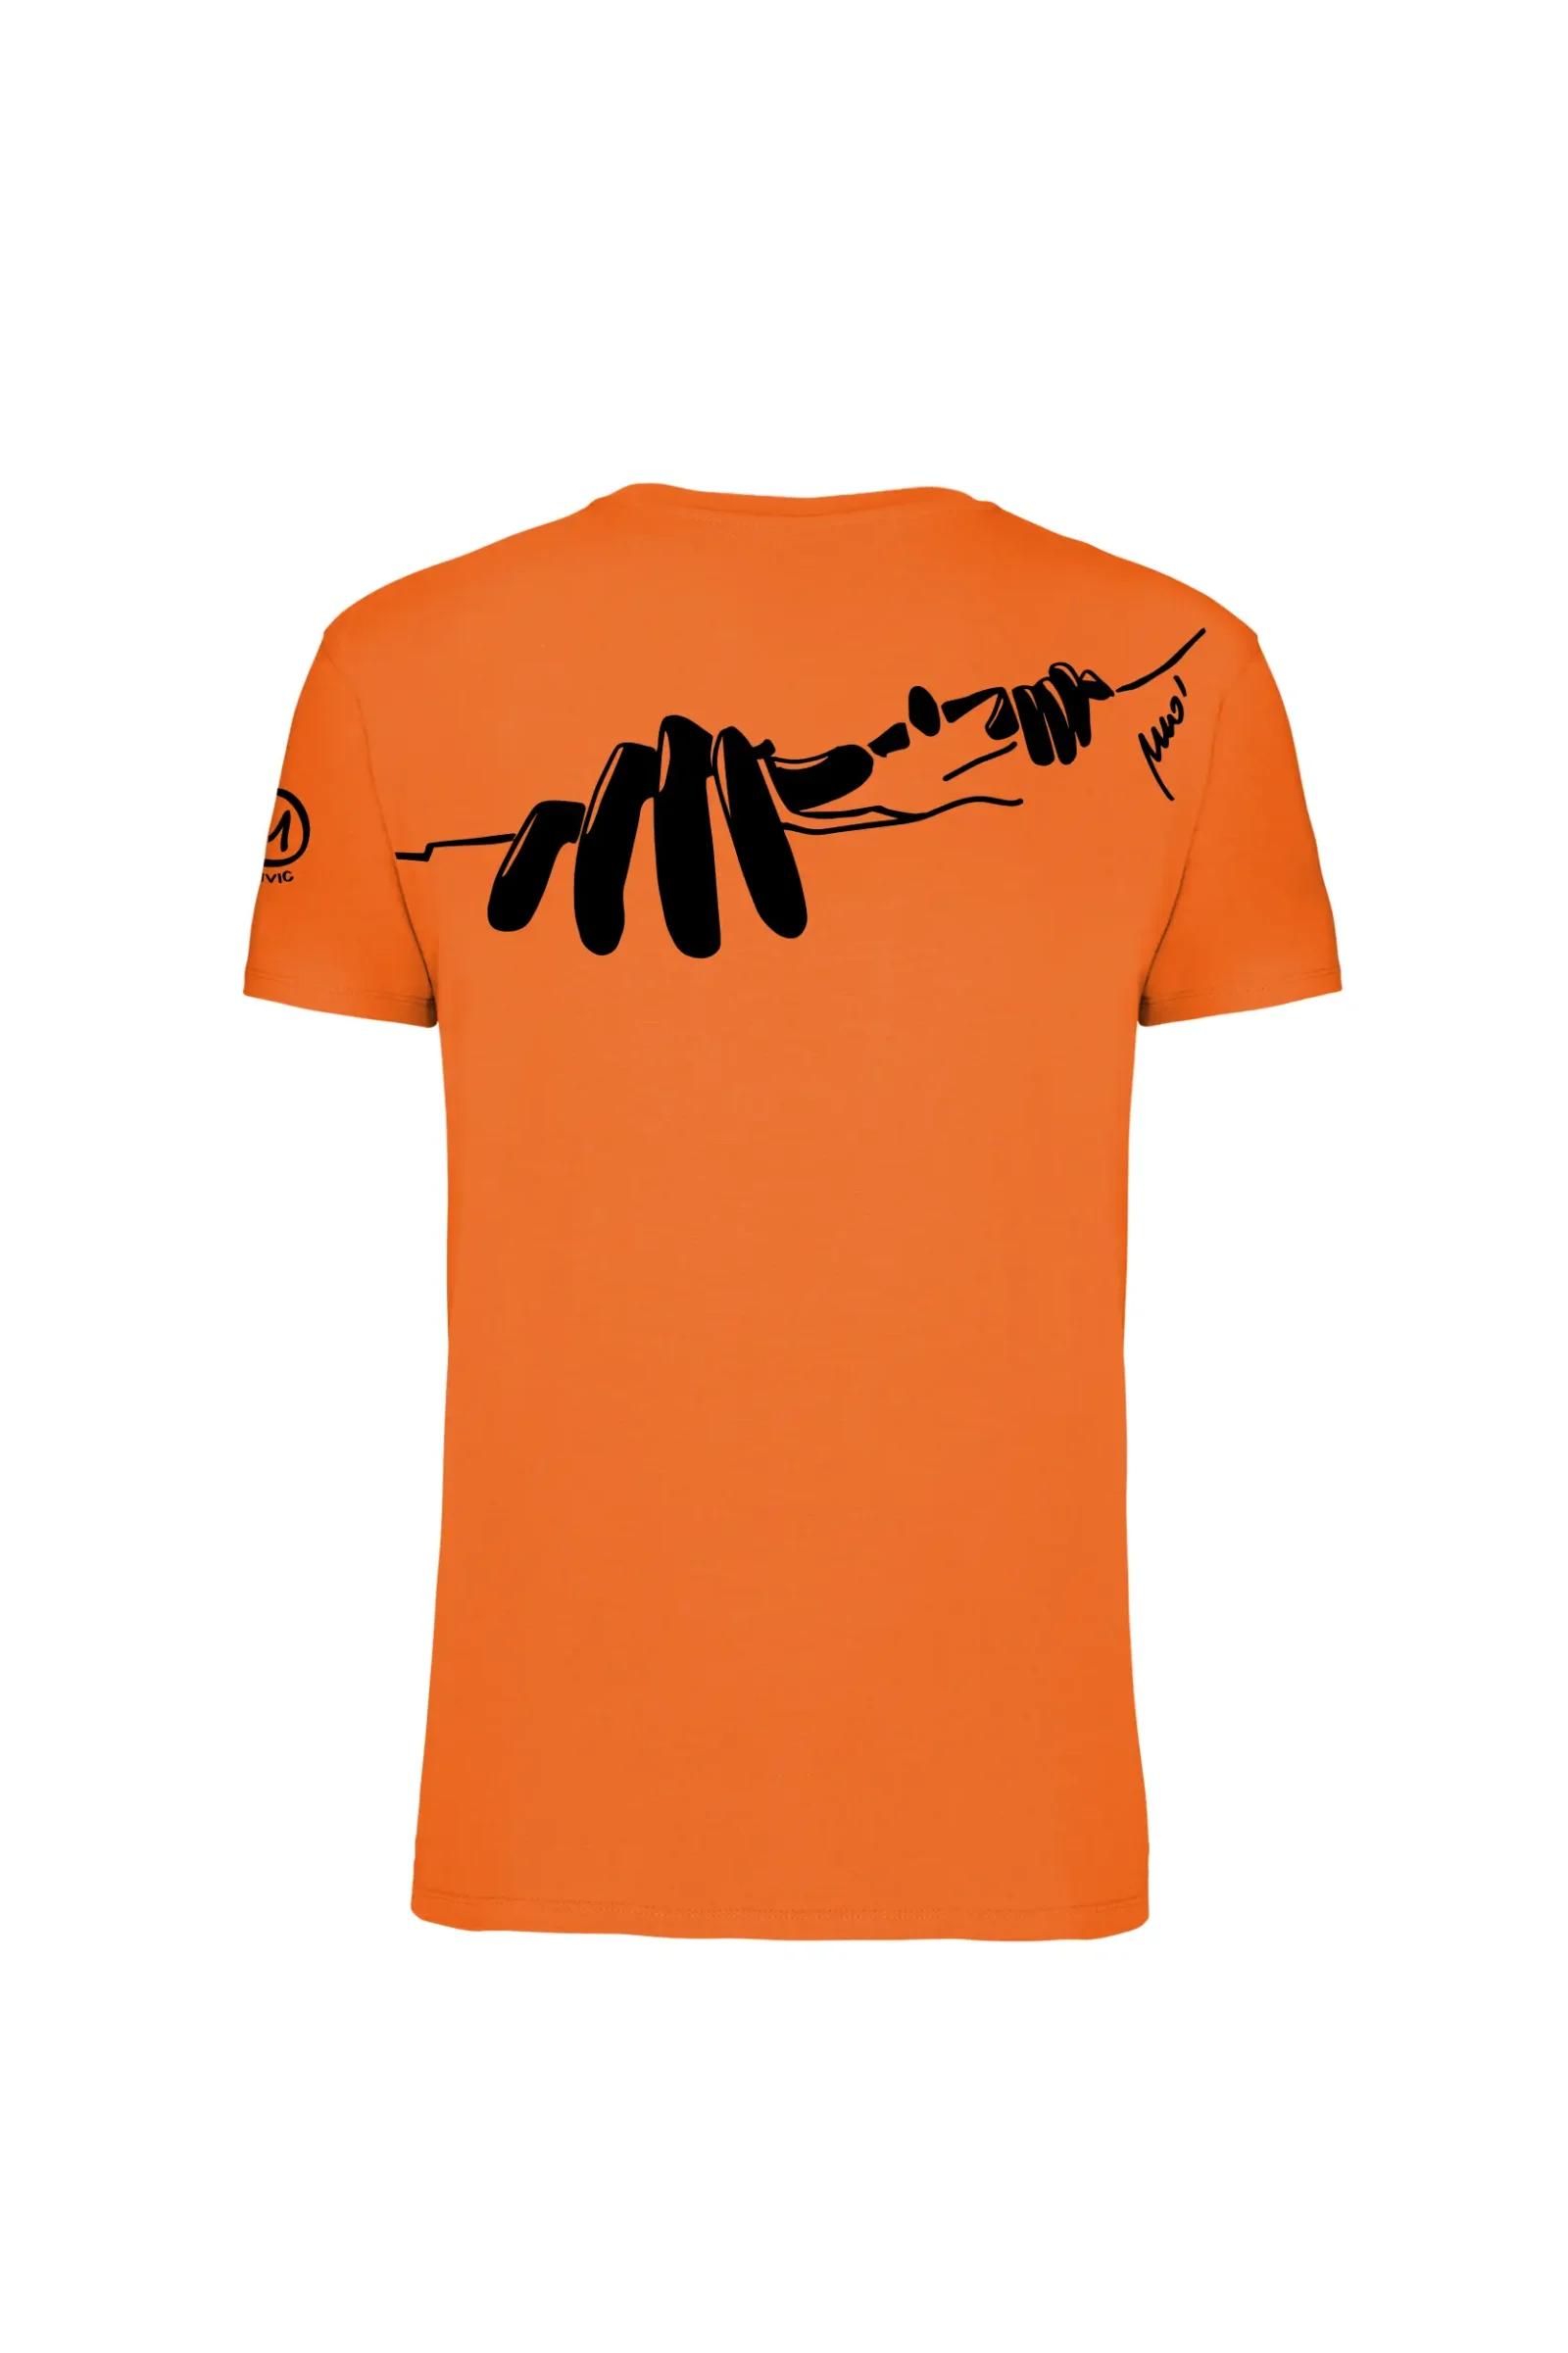 T-shirt arrampicata uomo cotone arancione HASH MONVIC "Manone"